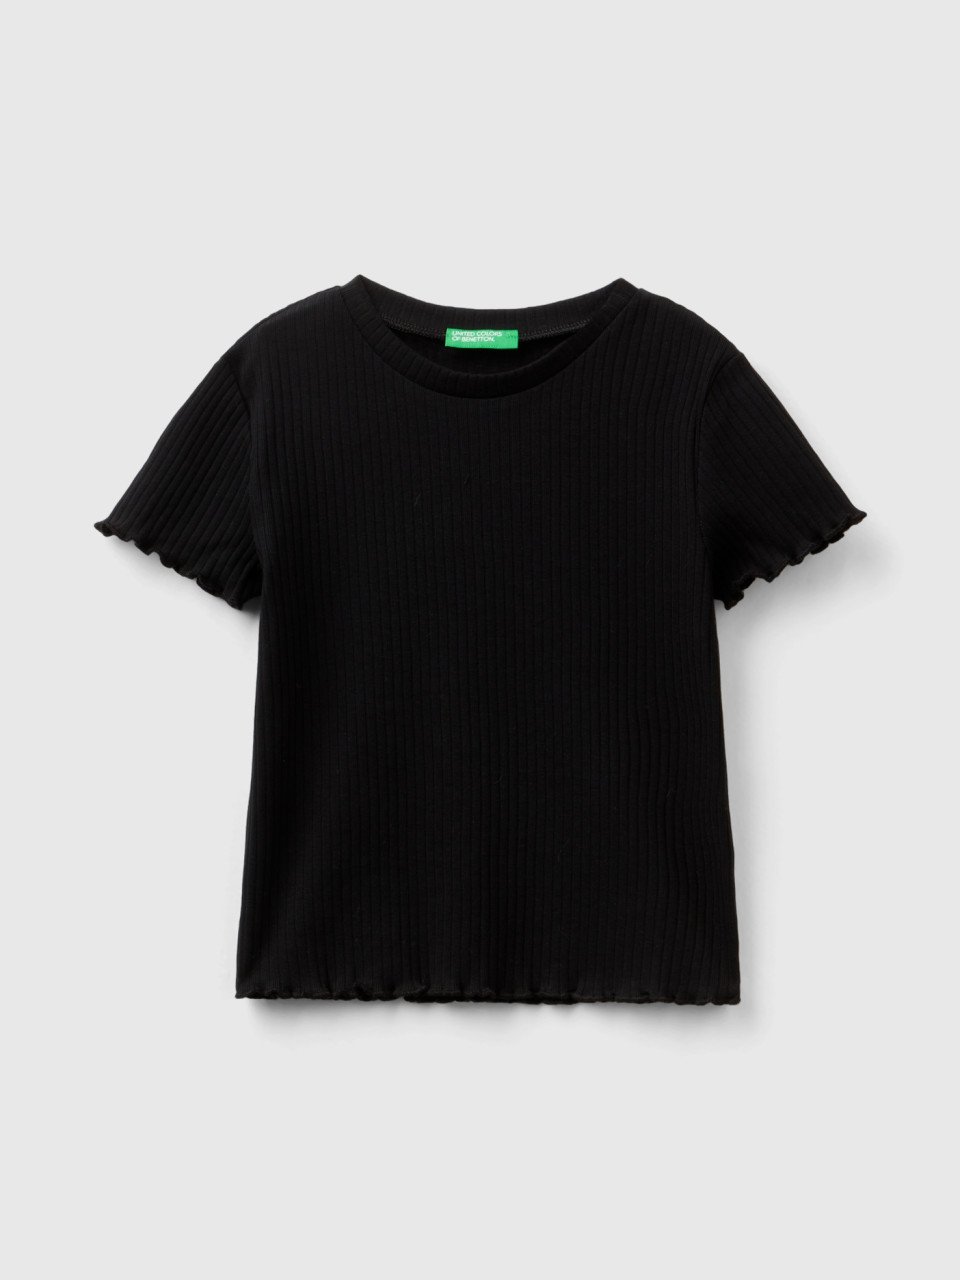 Benetton, Ribbed Short Sleeve T-shirt, Black, Kids